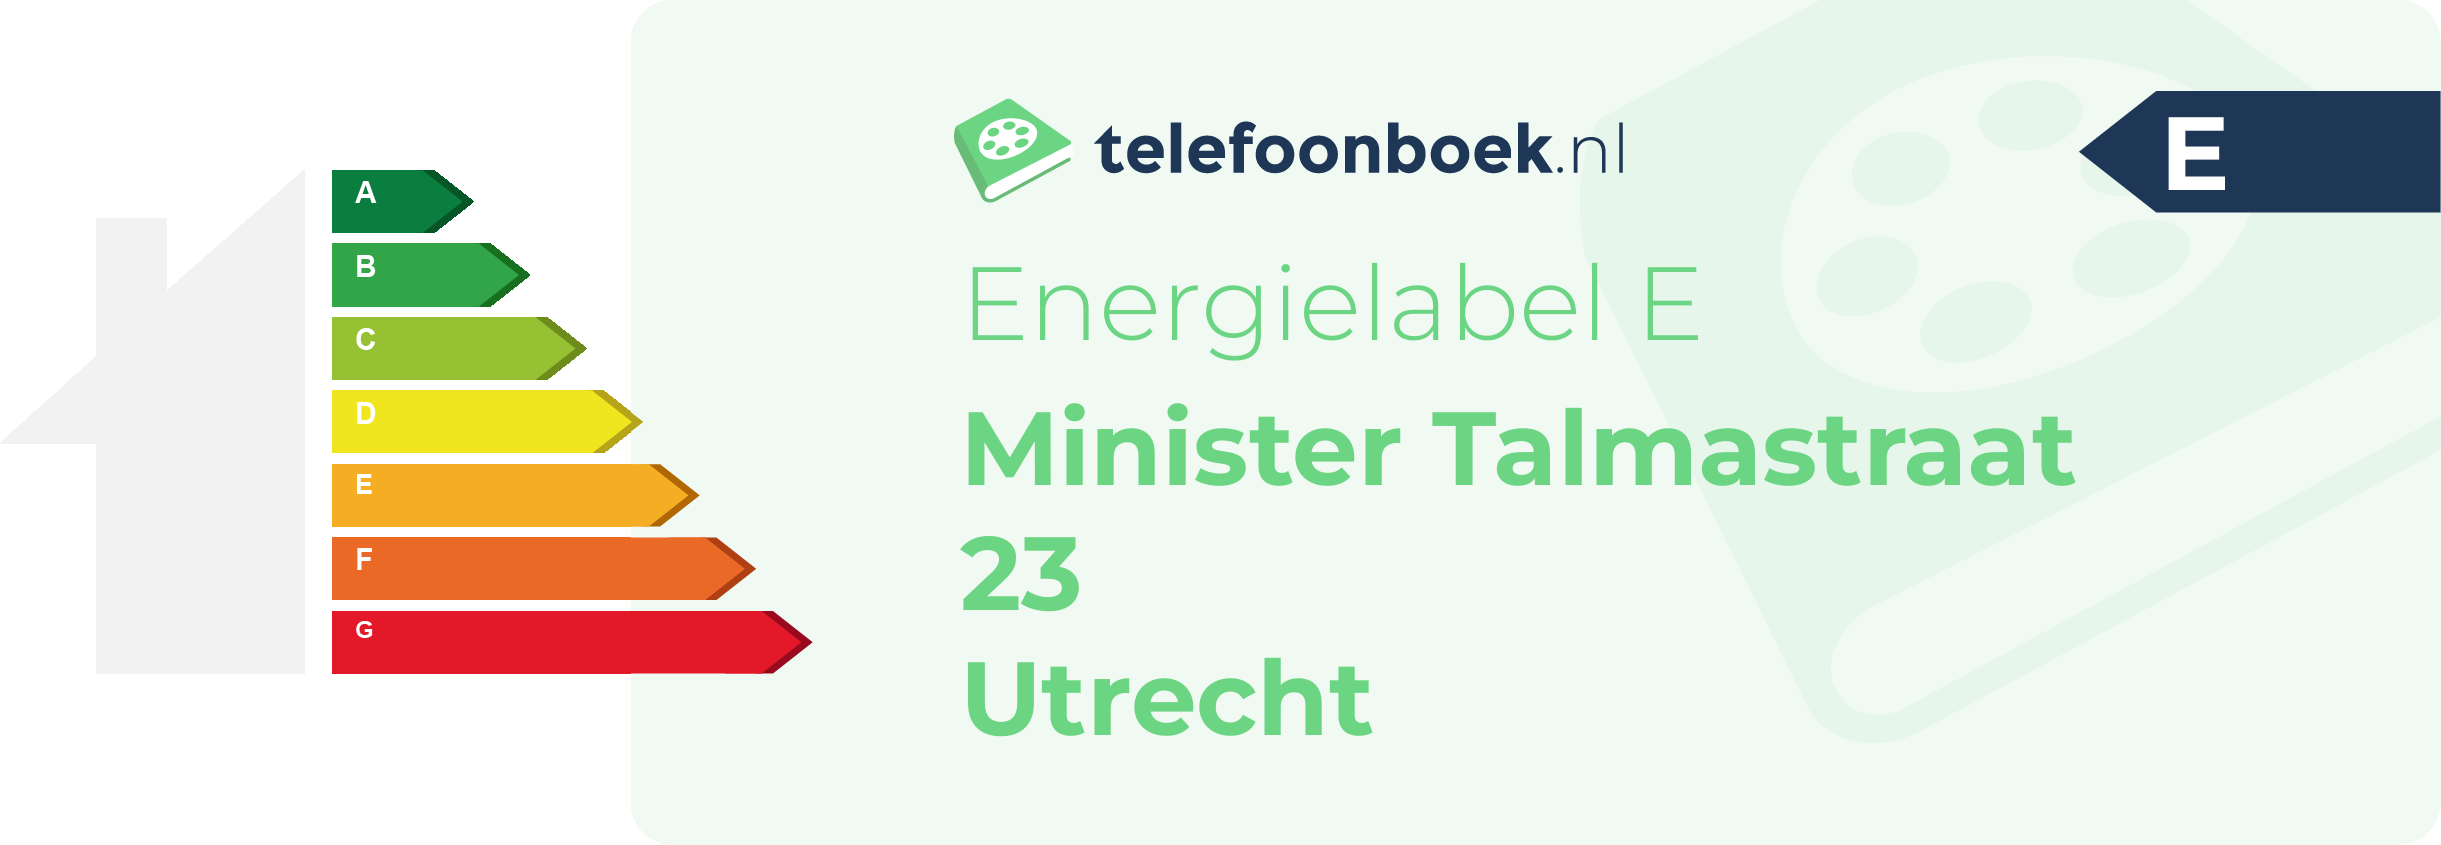 Energielabel Minister Talmastraat 23 Utrecht